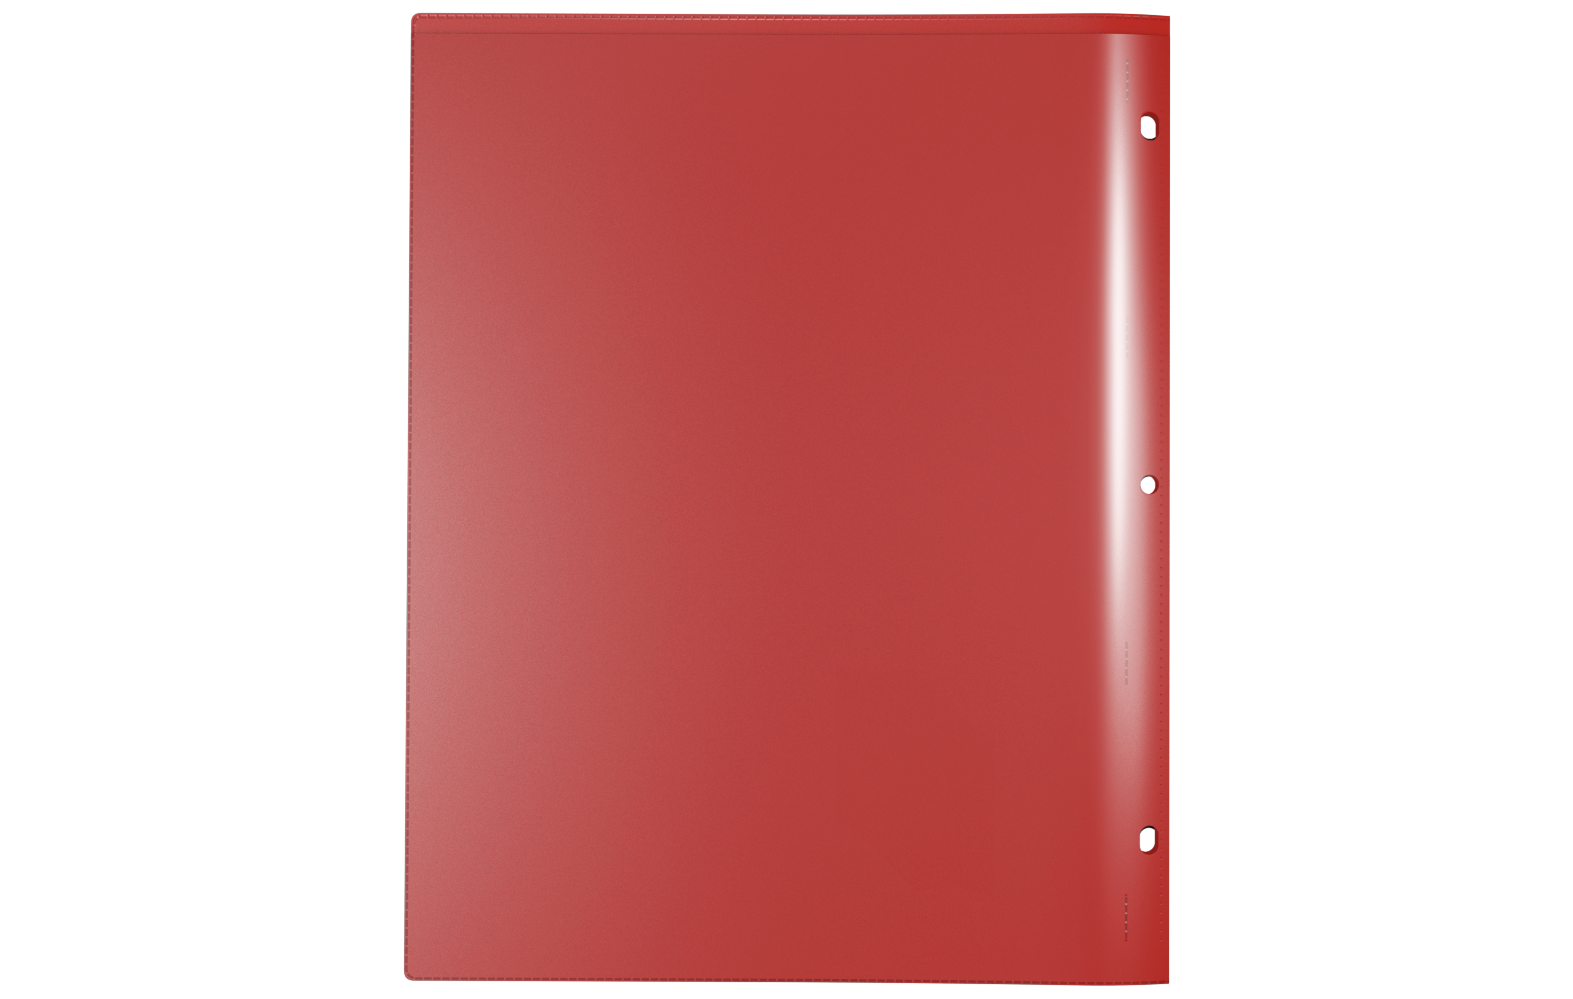 Back view of Nicky's 4 Multi Pocket Sleeves Folder used for presentation.